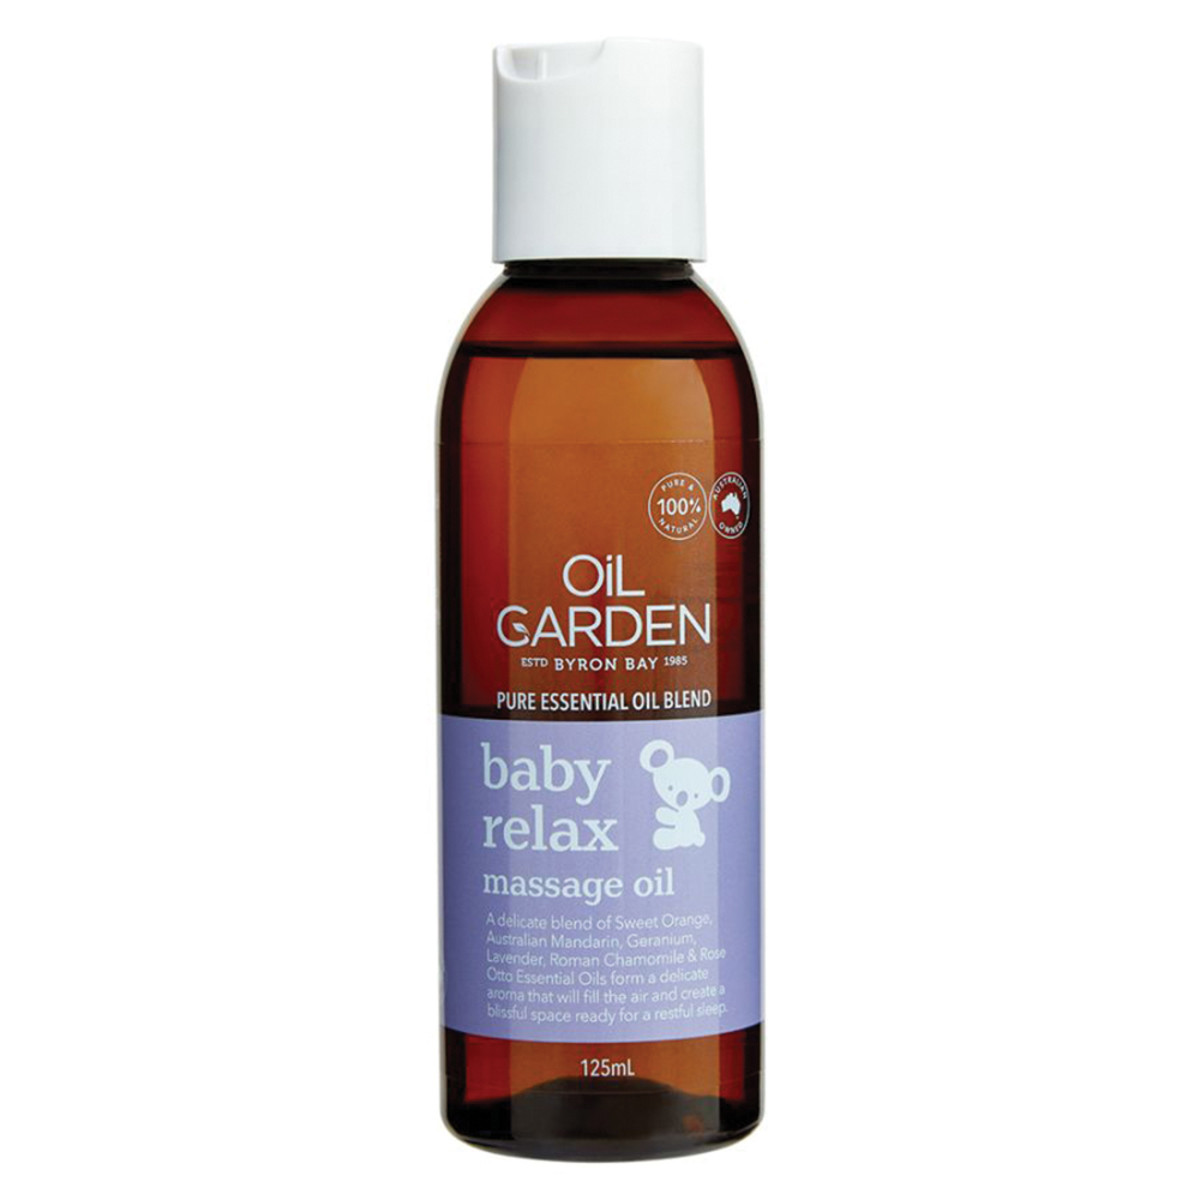 Oil Garden Baby Massage Oil Baby Relax 125ml_media-01